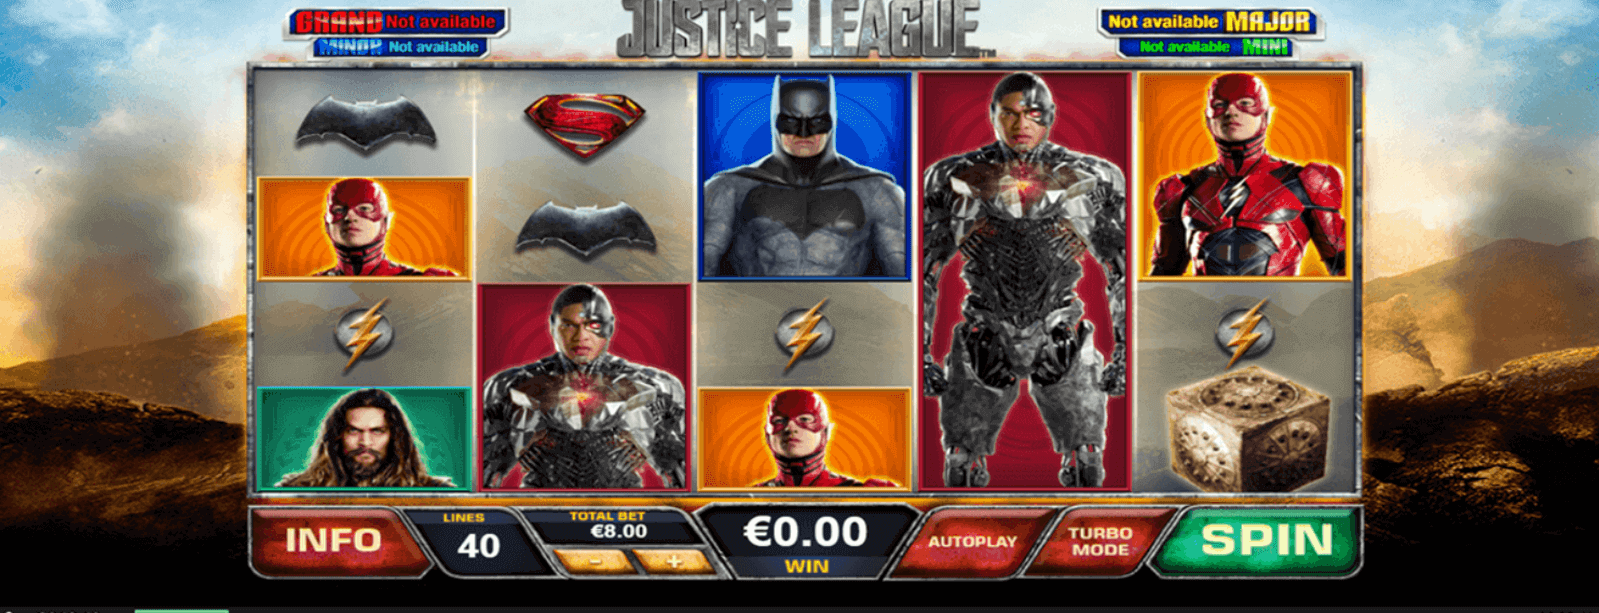 Tragamonedas Justice League de Playtech